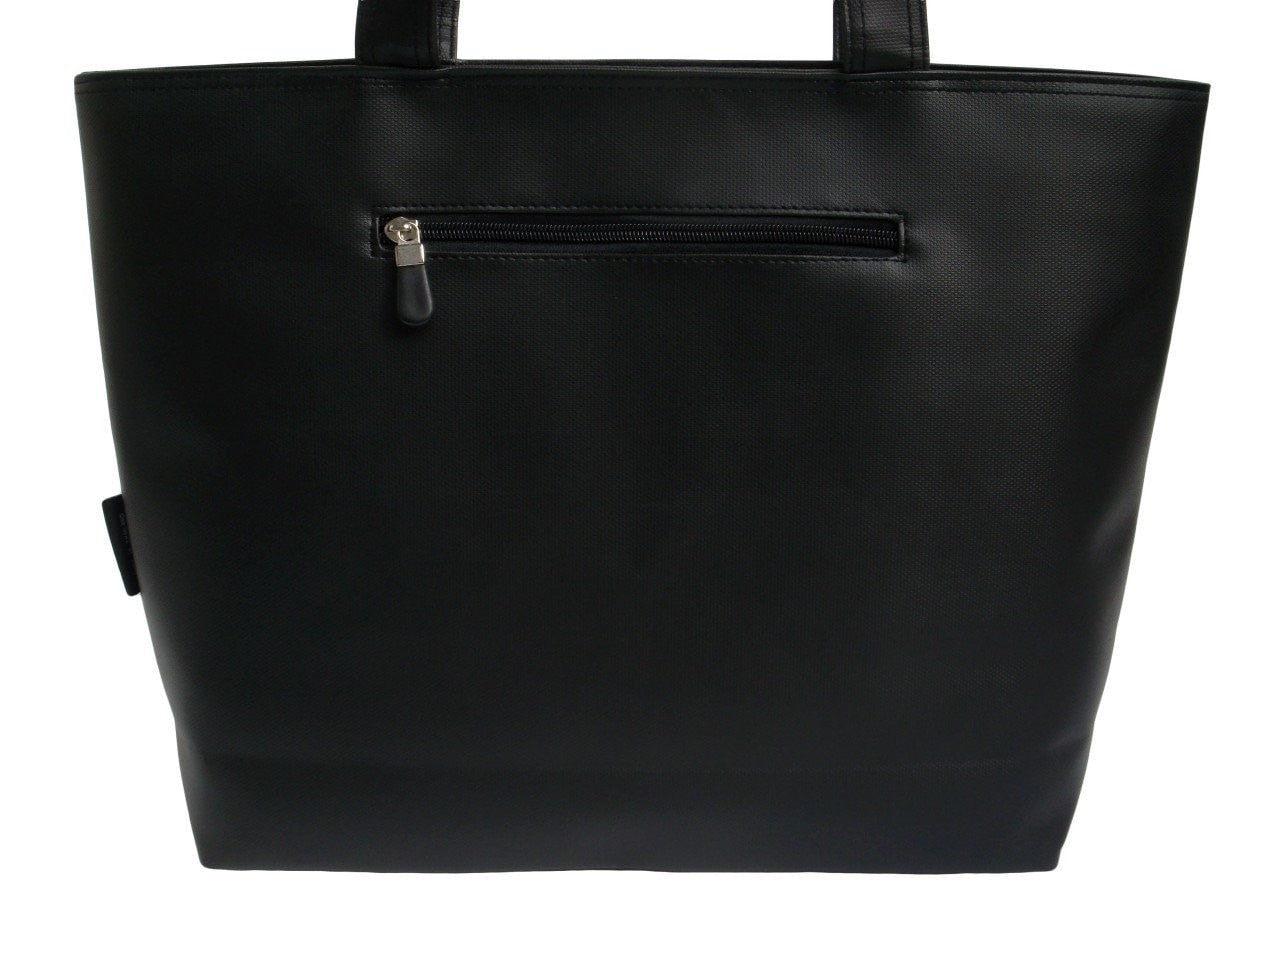 Audrey Hepburn Tote Bag with Signature - SilverMania925